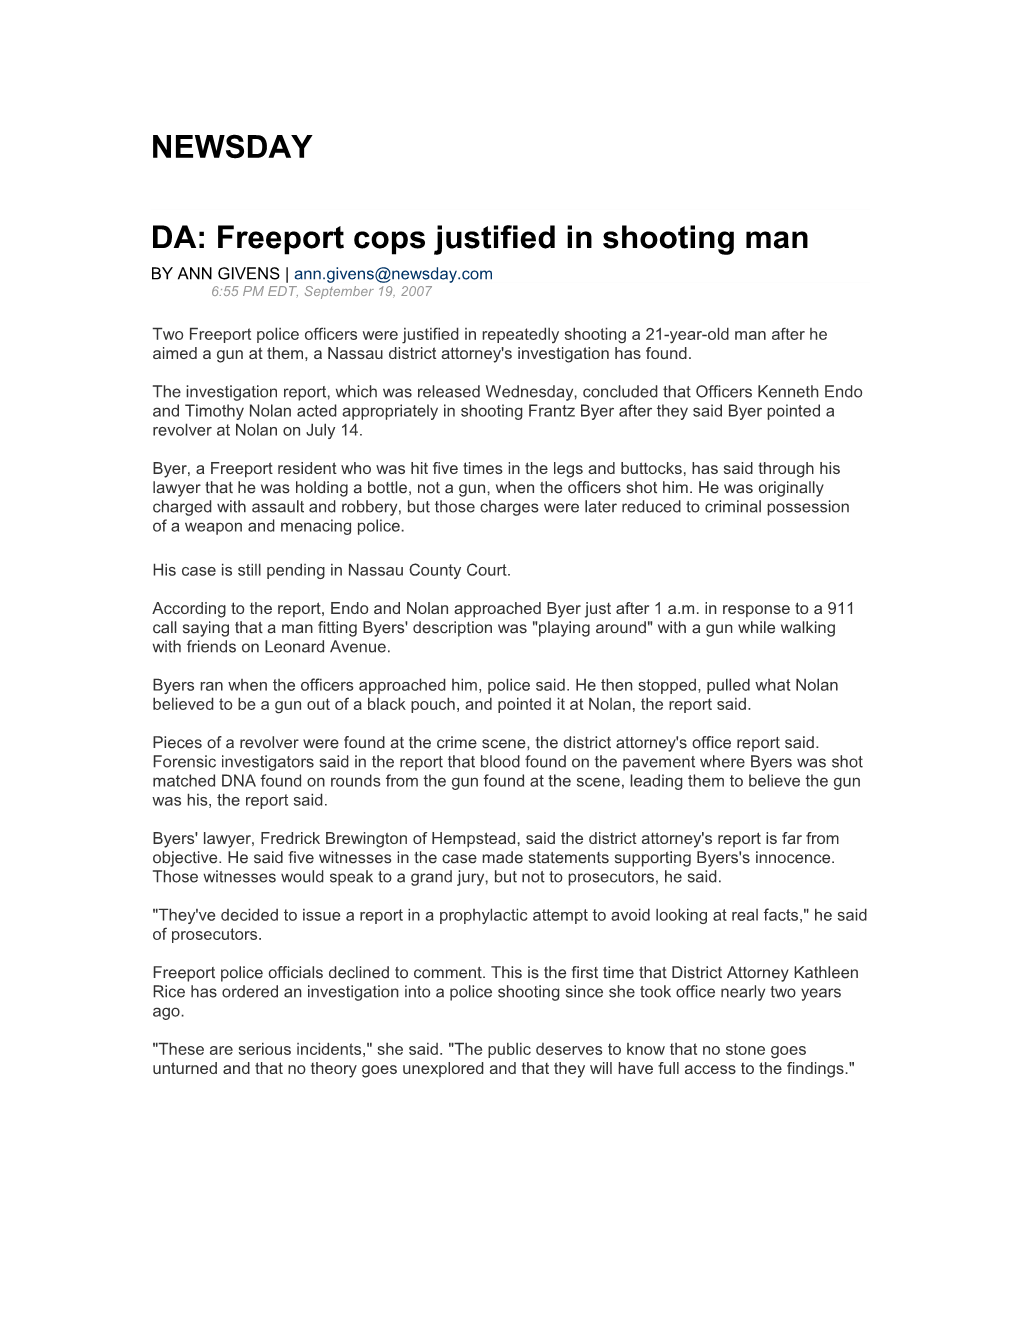 DA: Freeport Cops Justified in Shooting Man